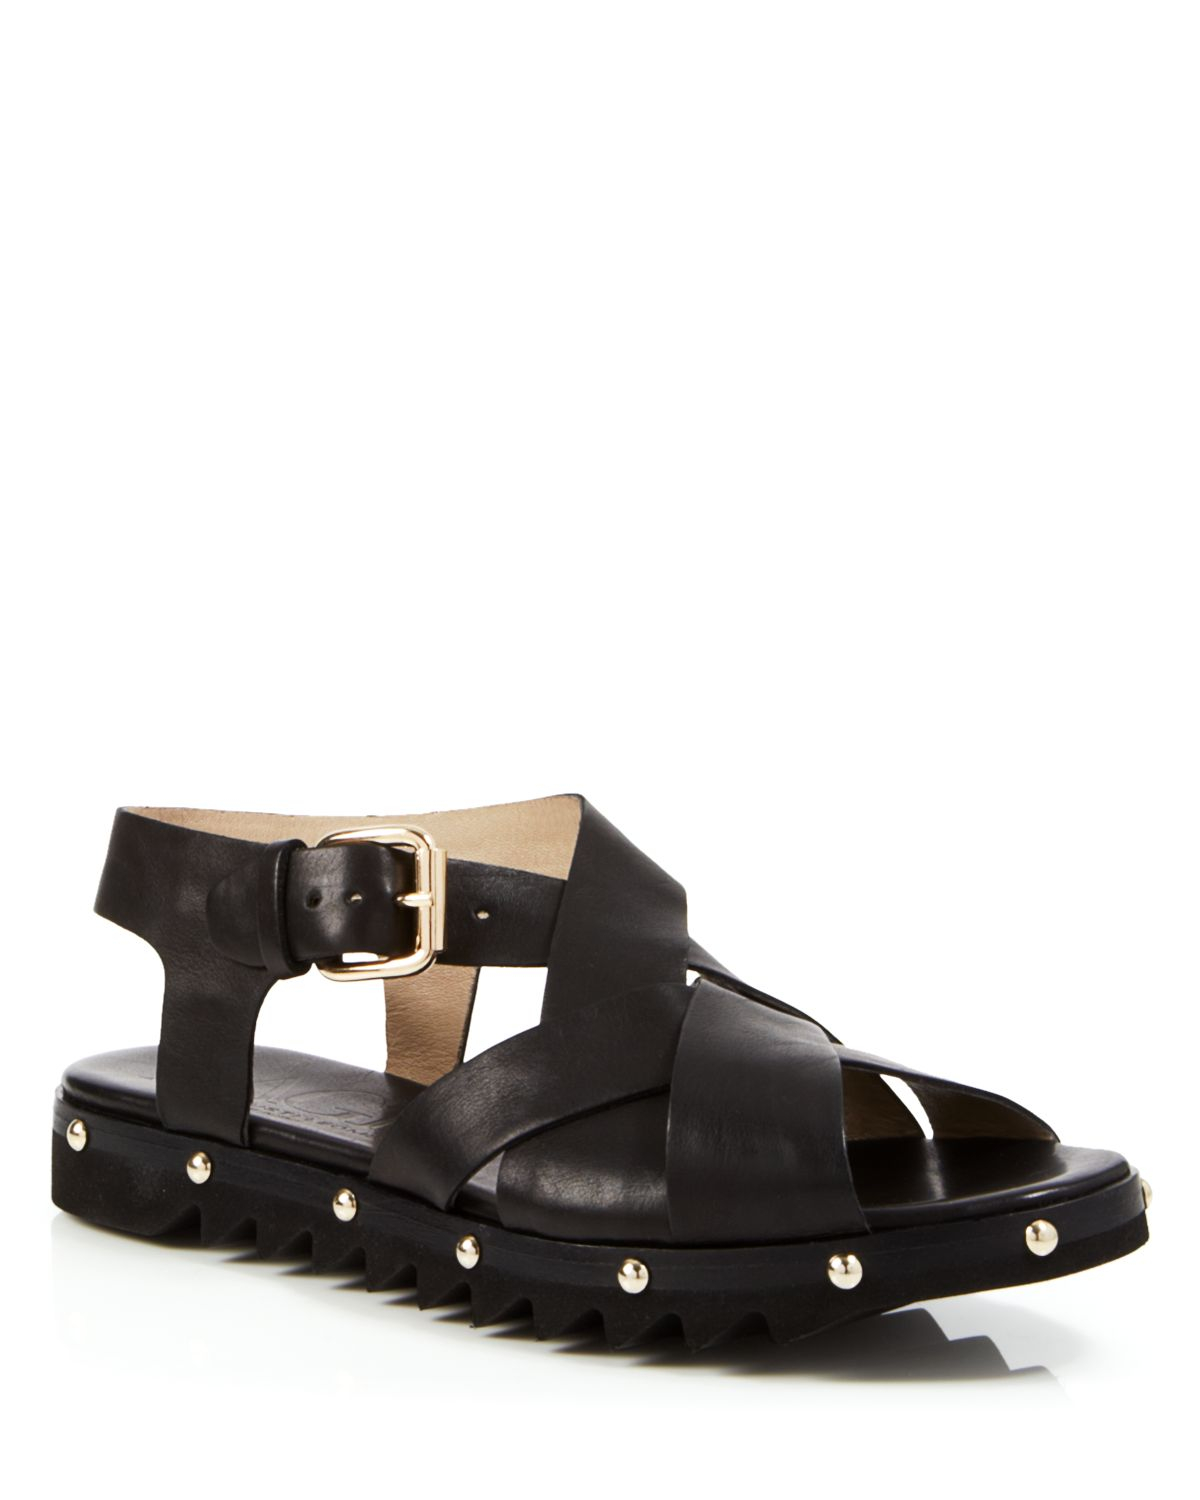 Agl attilio giusti leombruni Flat Sandals - Studded in Black | Lyst